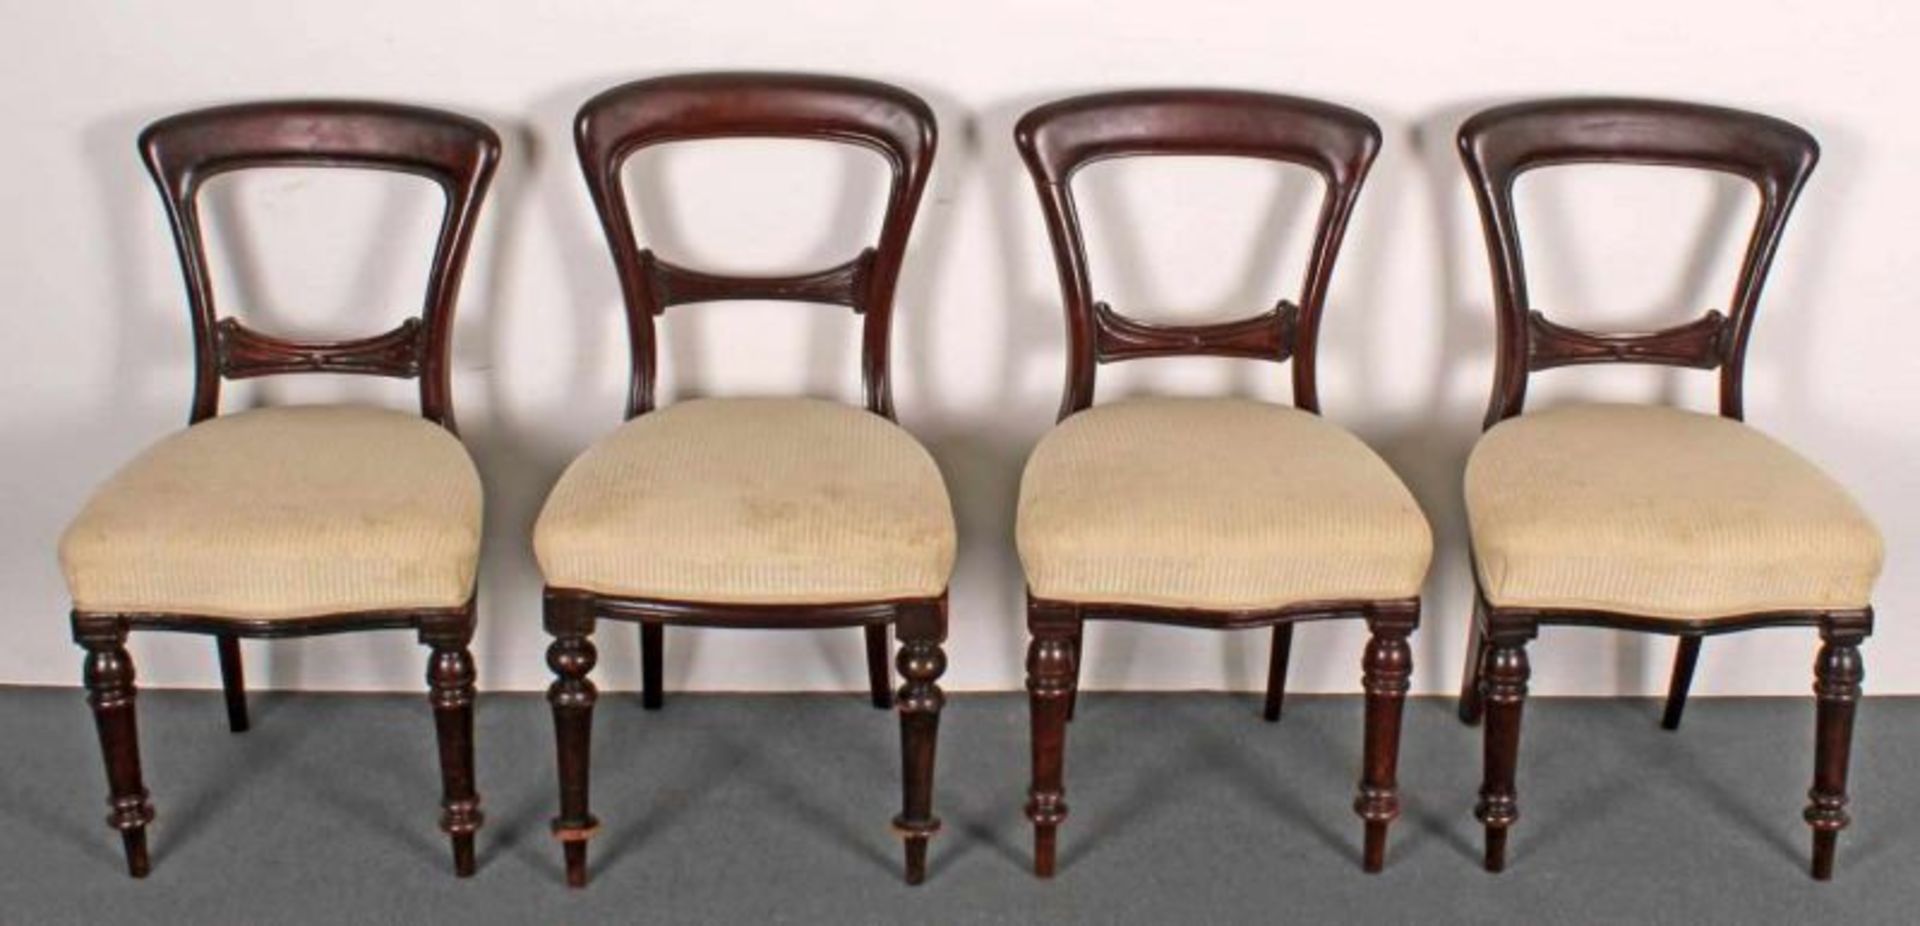 4 Stühle, England, 19. Jh., Mahagoni, Sitzpolster, restaurierungsbedürftig, Bezug fleckig 20.00 %